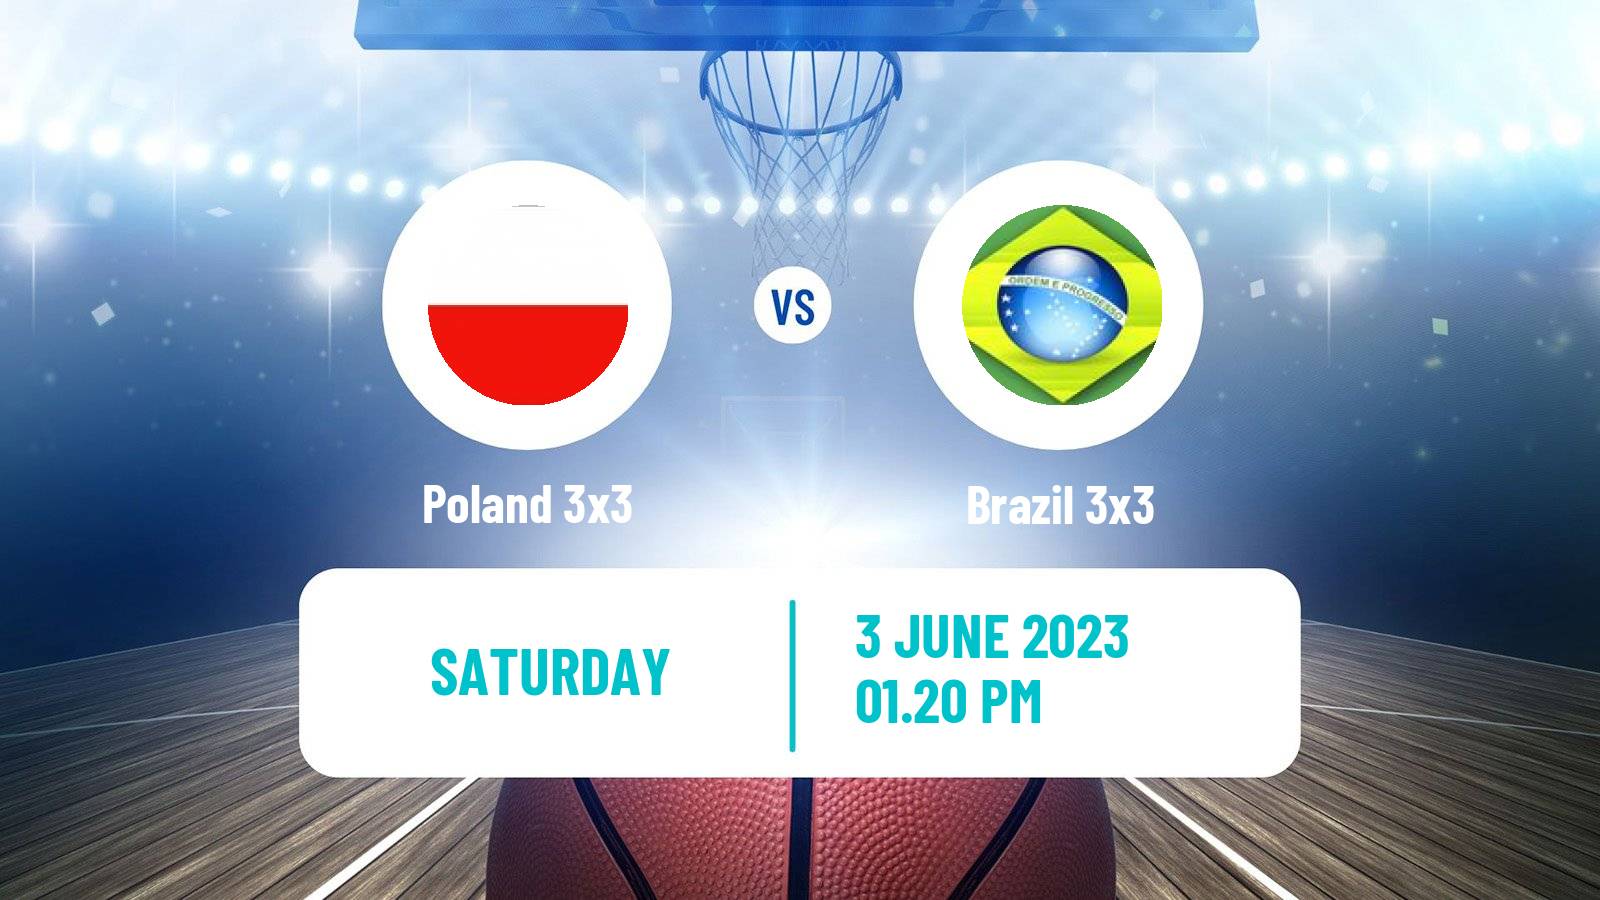 Basketball World Cup Basketball 3x3 Poland 3x3 - Brazil 3x3